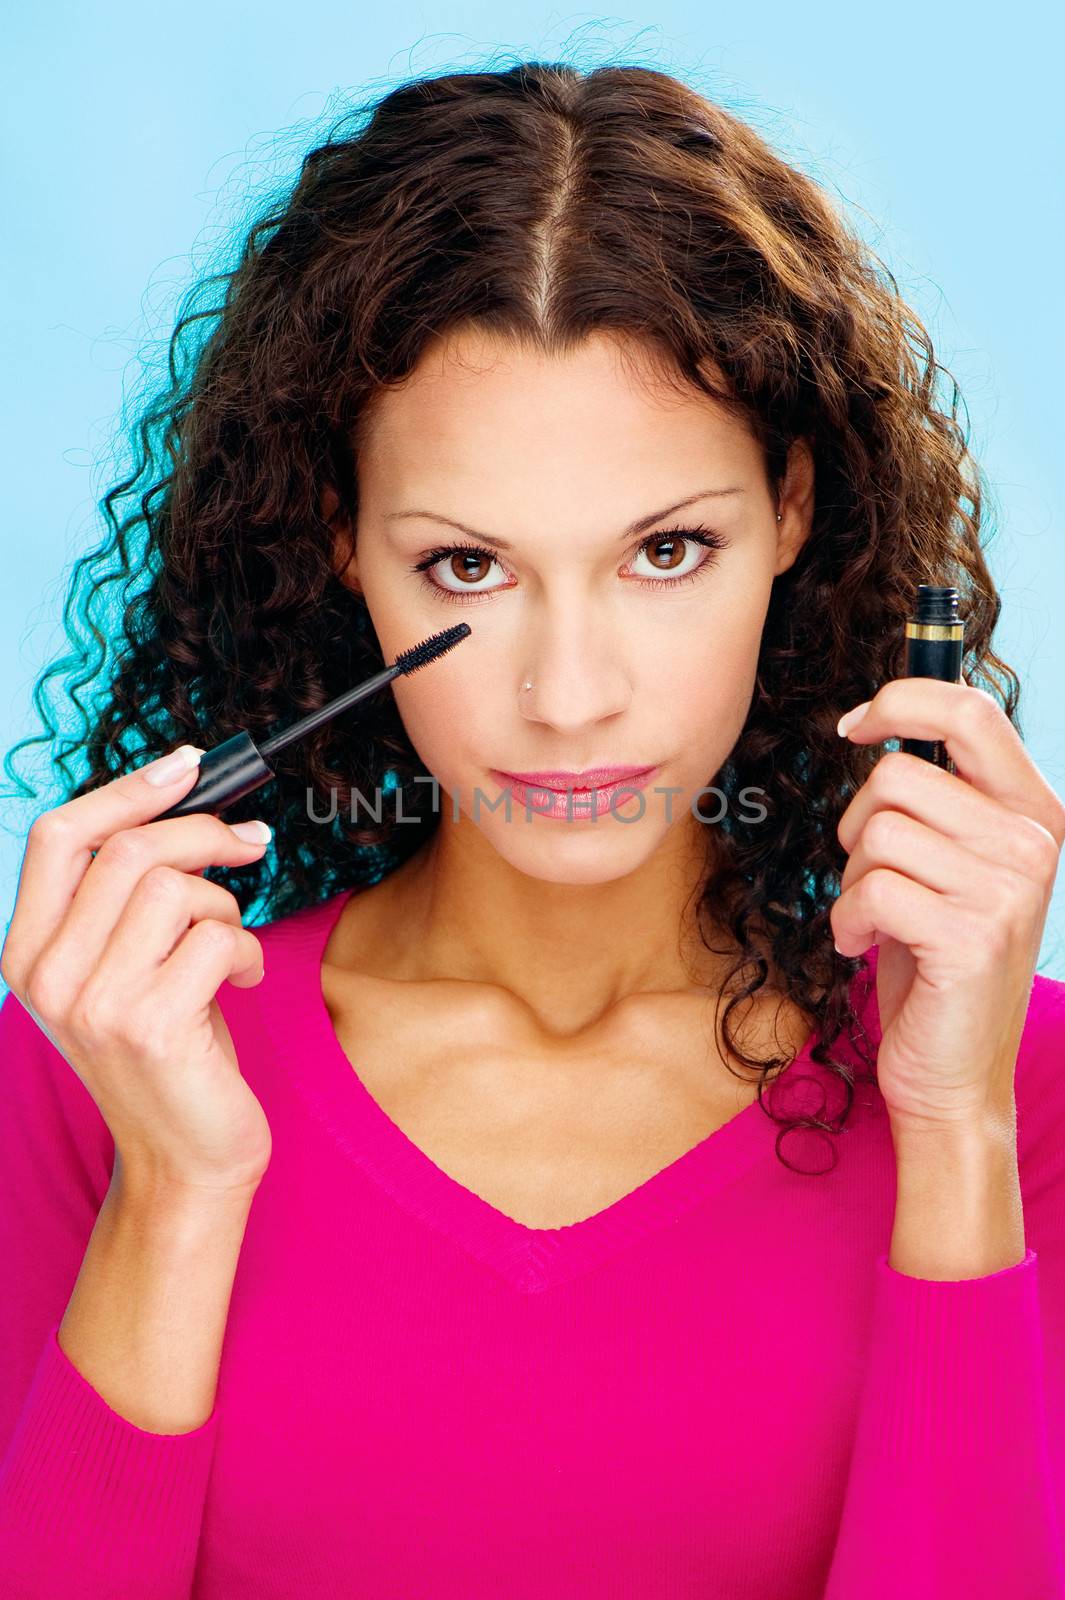 Pretty curl hair brunette woman holding mascara